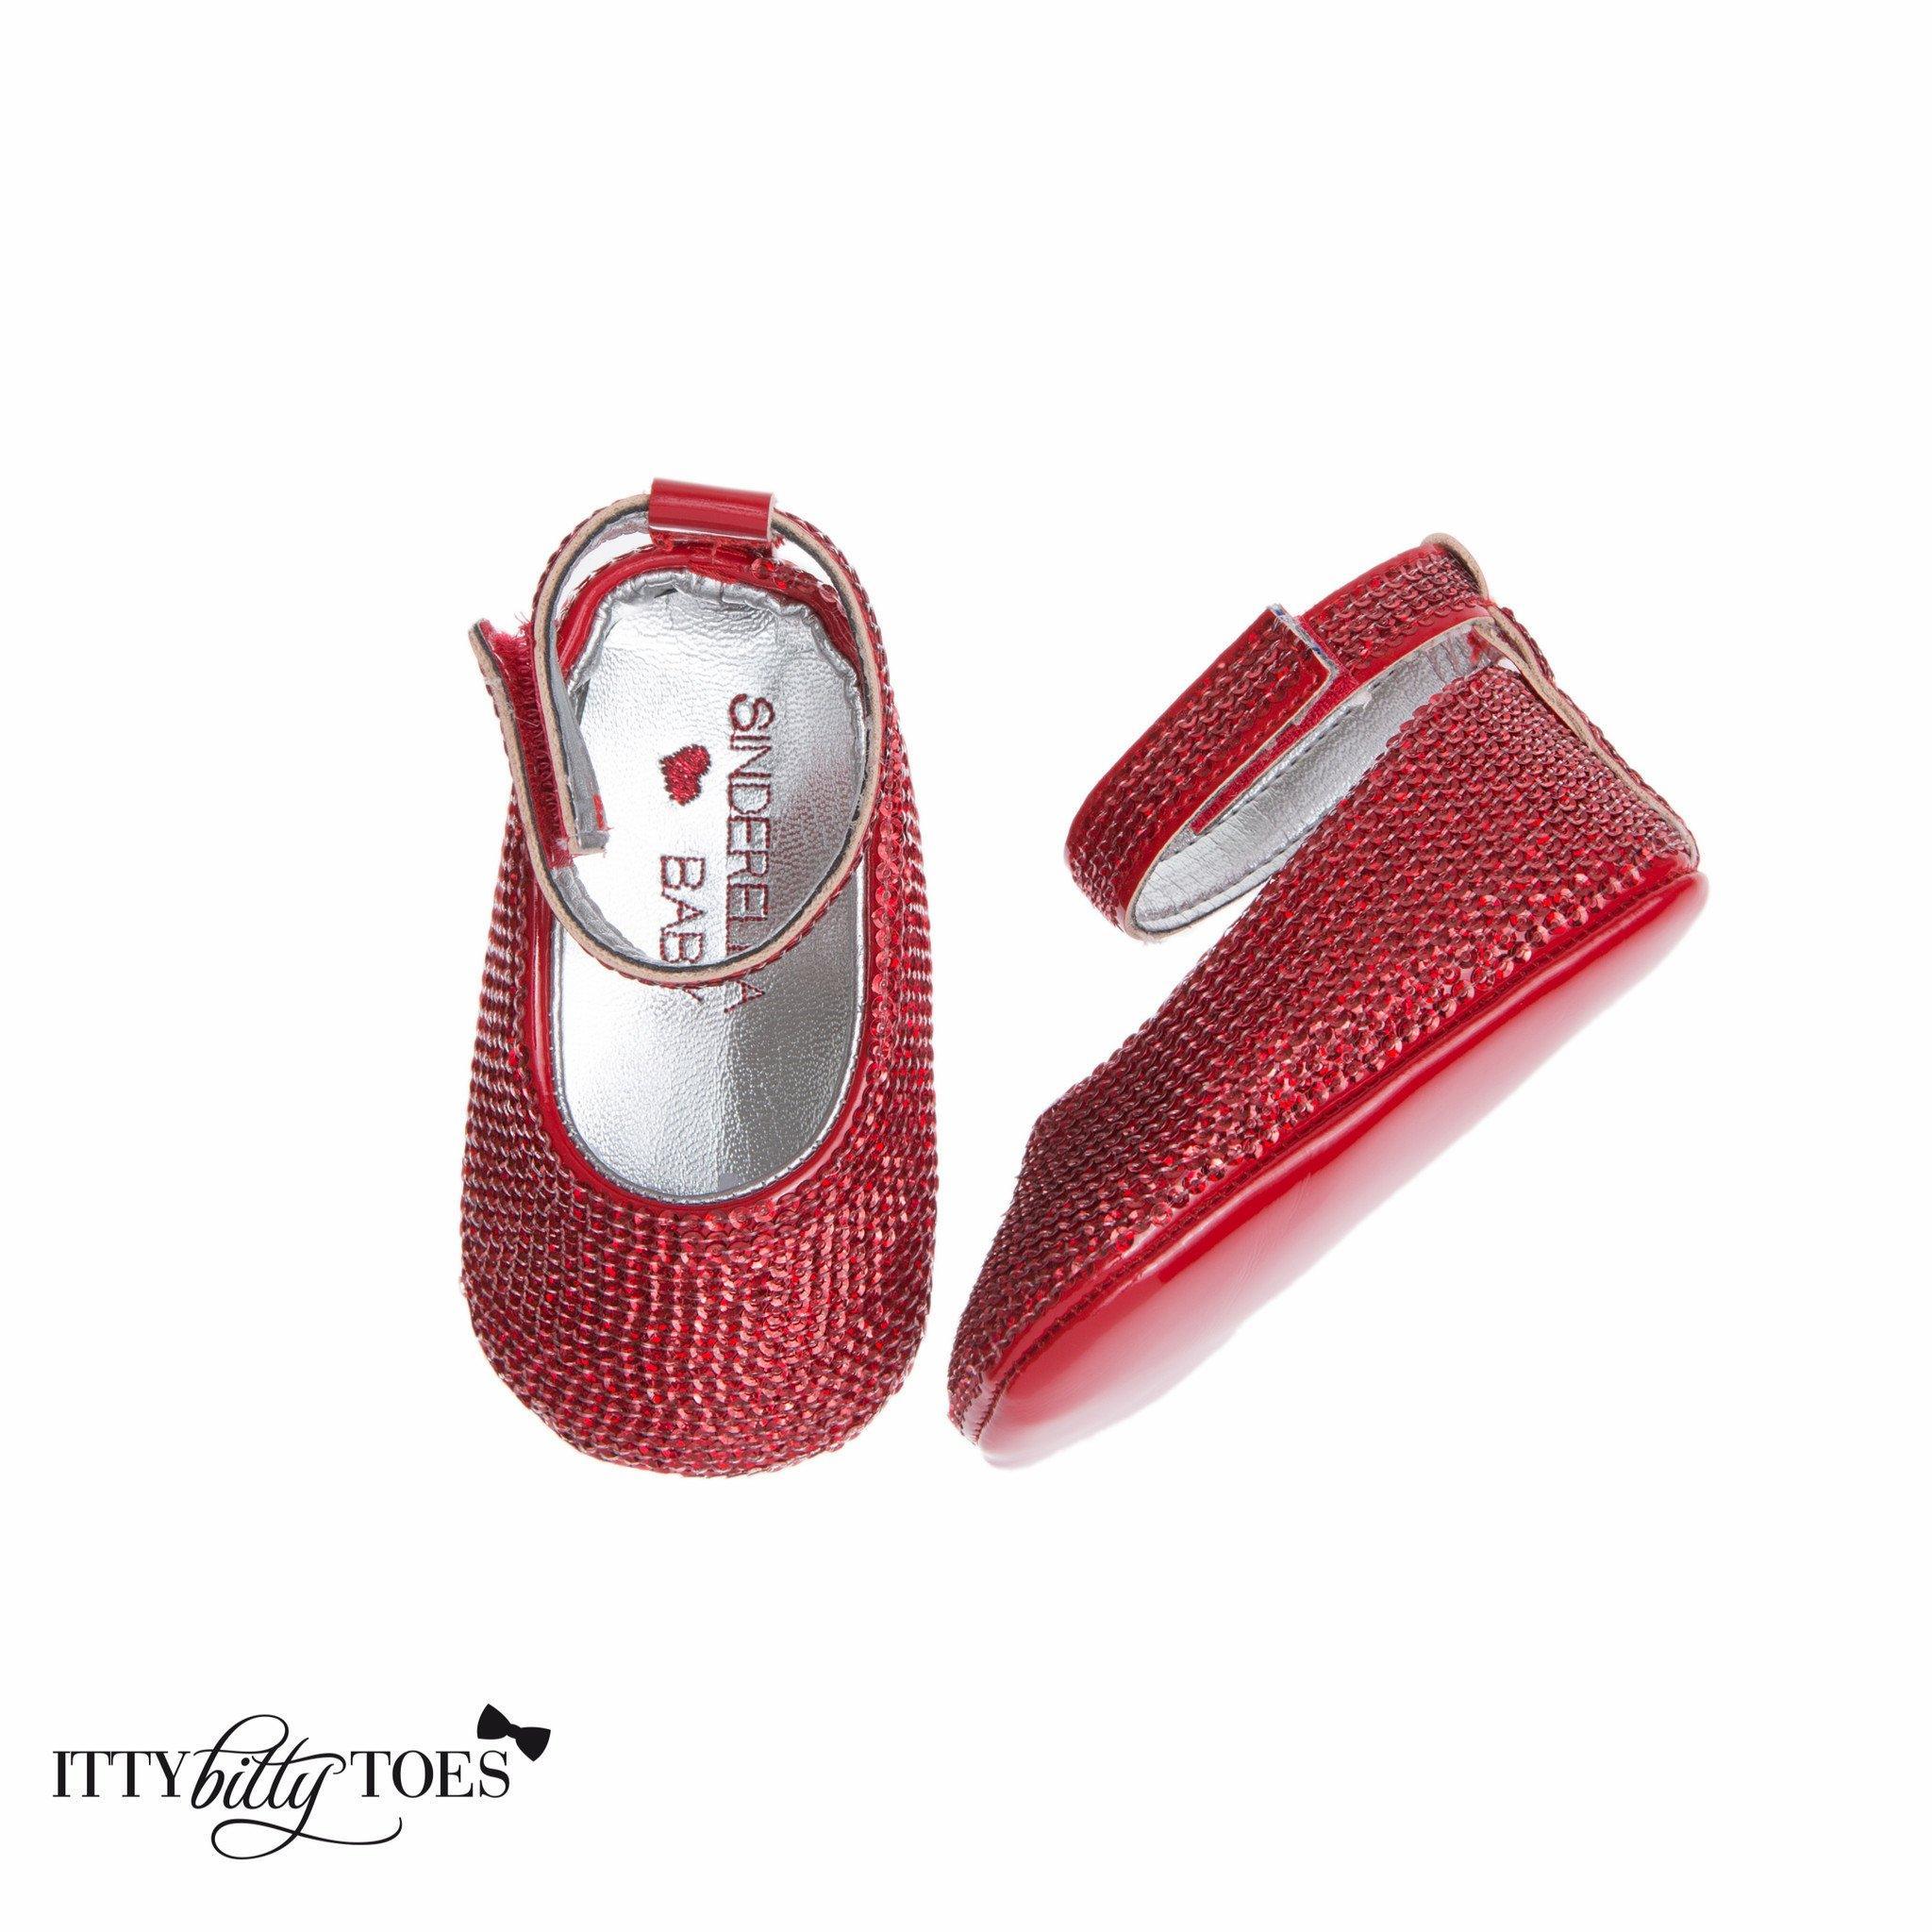 Womens Red Patent Leather Heels Sandals | Platform Shoes Women's High Heels  - Dress - Aliexpress